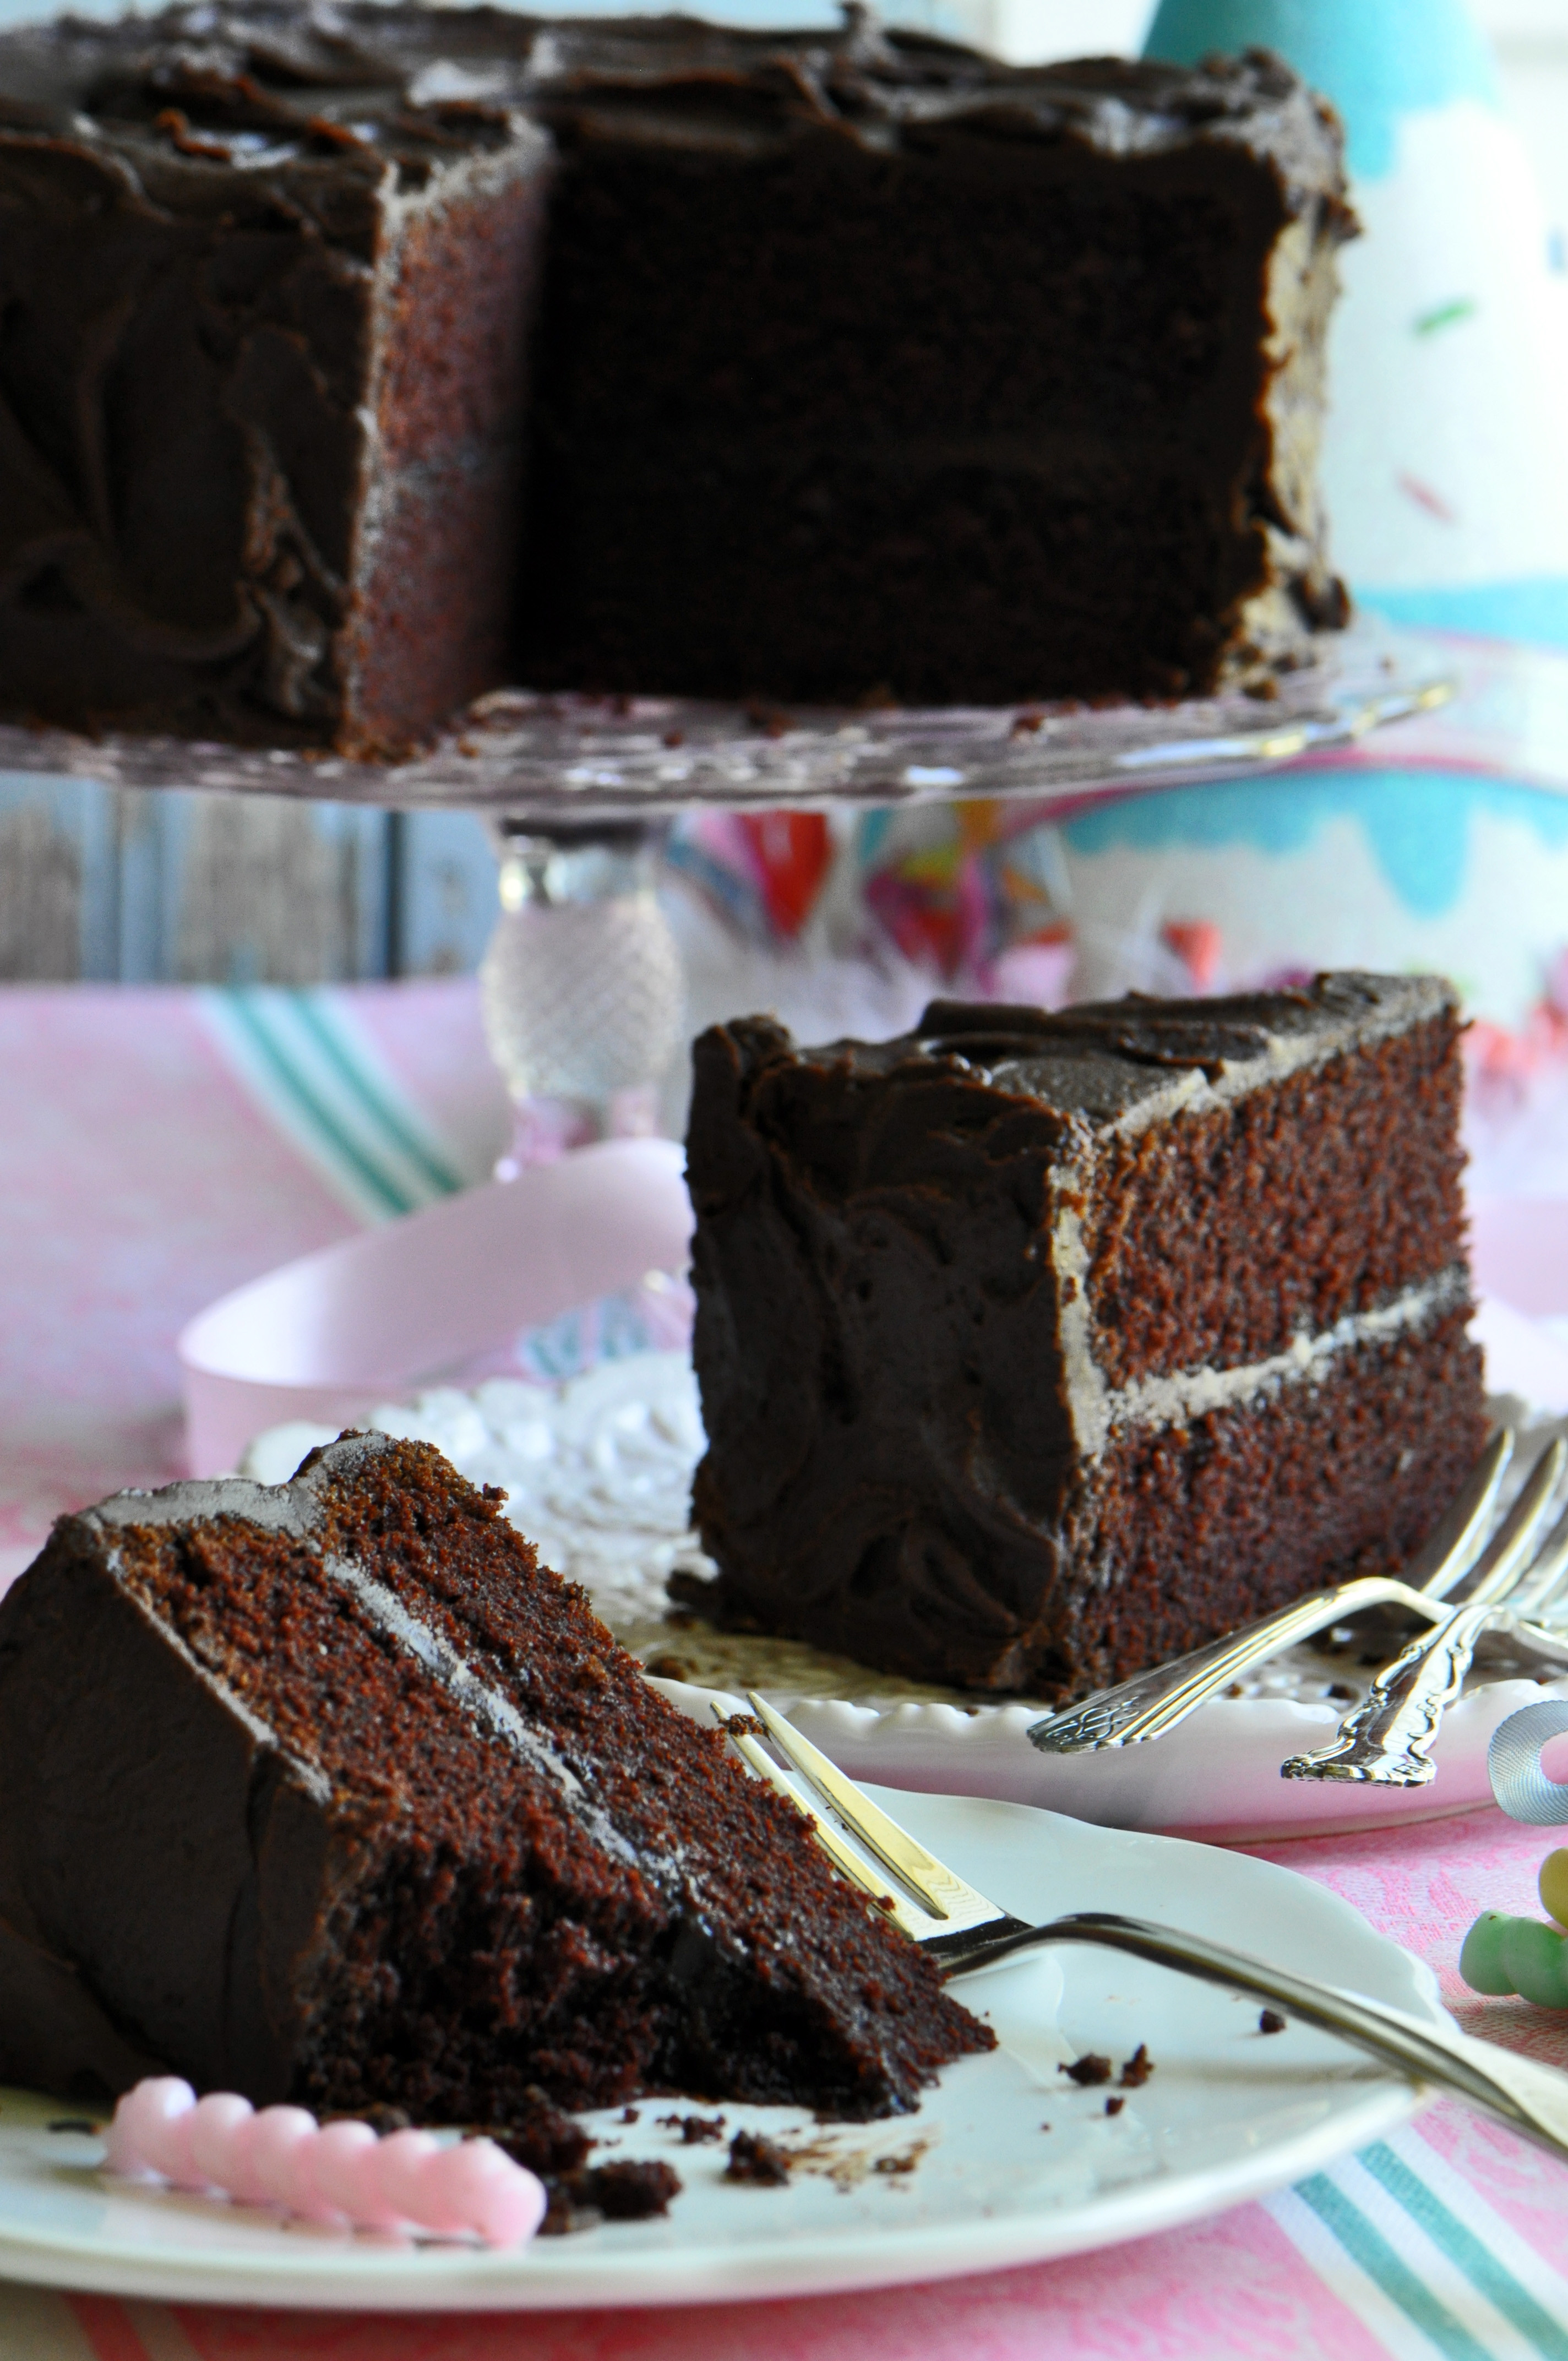 Best ideas about Chocolate Birthday Cake Recipes
. Save or Pin Chocolate Fudge Birthday Cake Baking Recipe Now.